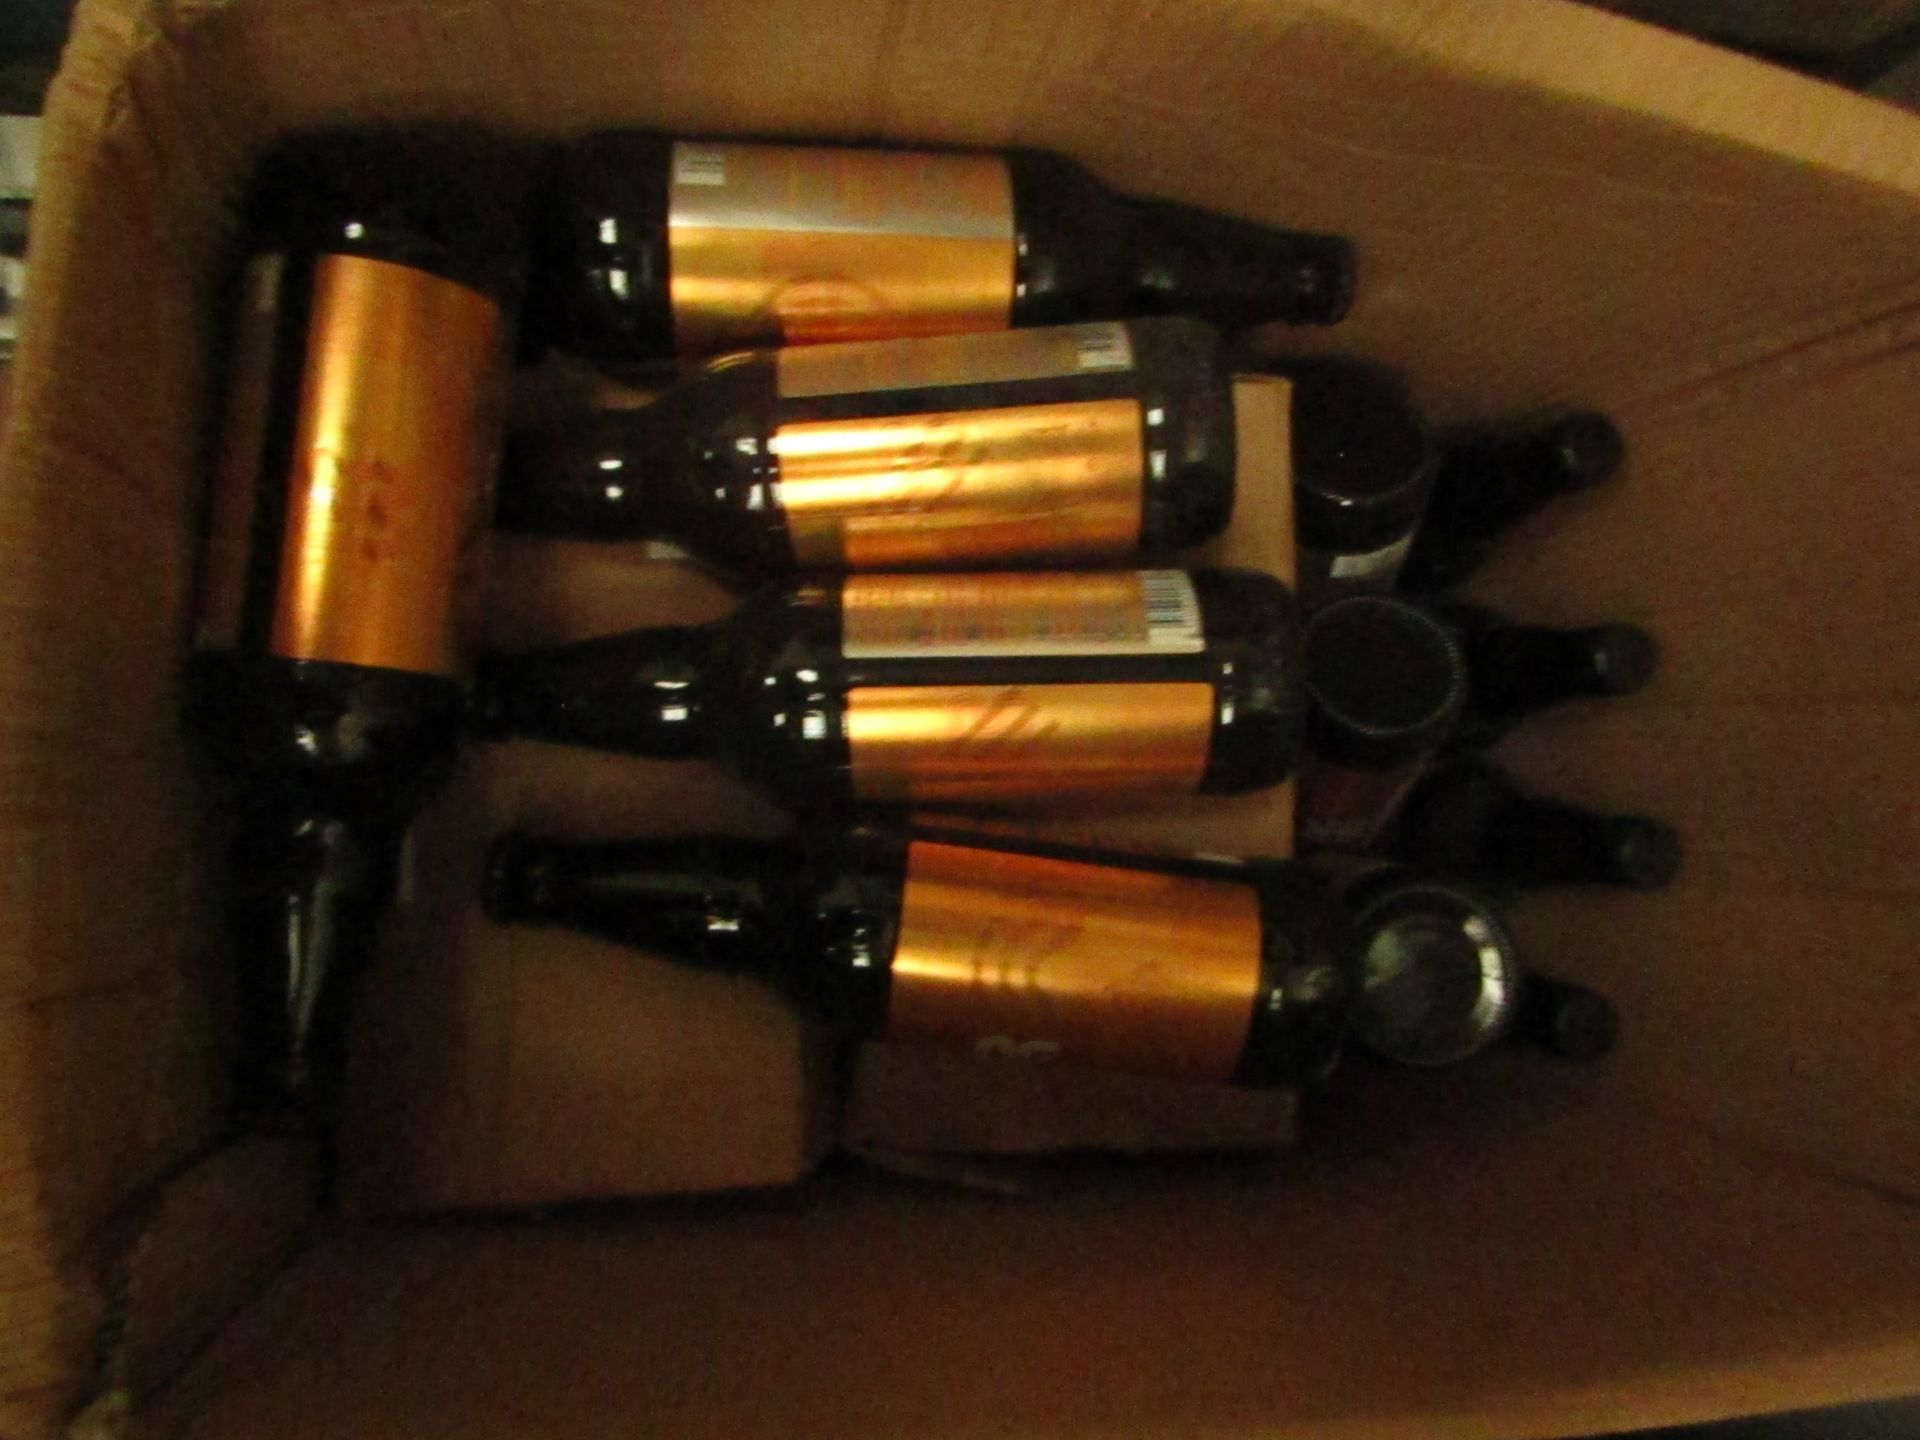 1x Box Containing Approx 29x Bottles Of - Eden River Brew Co - Aurum - Refreshingly Fruity Golden